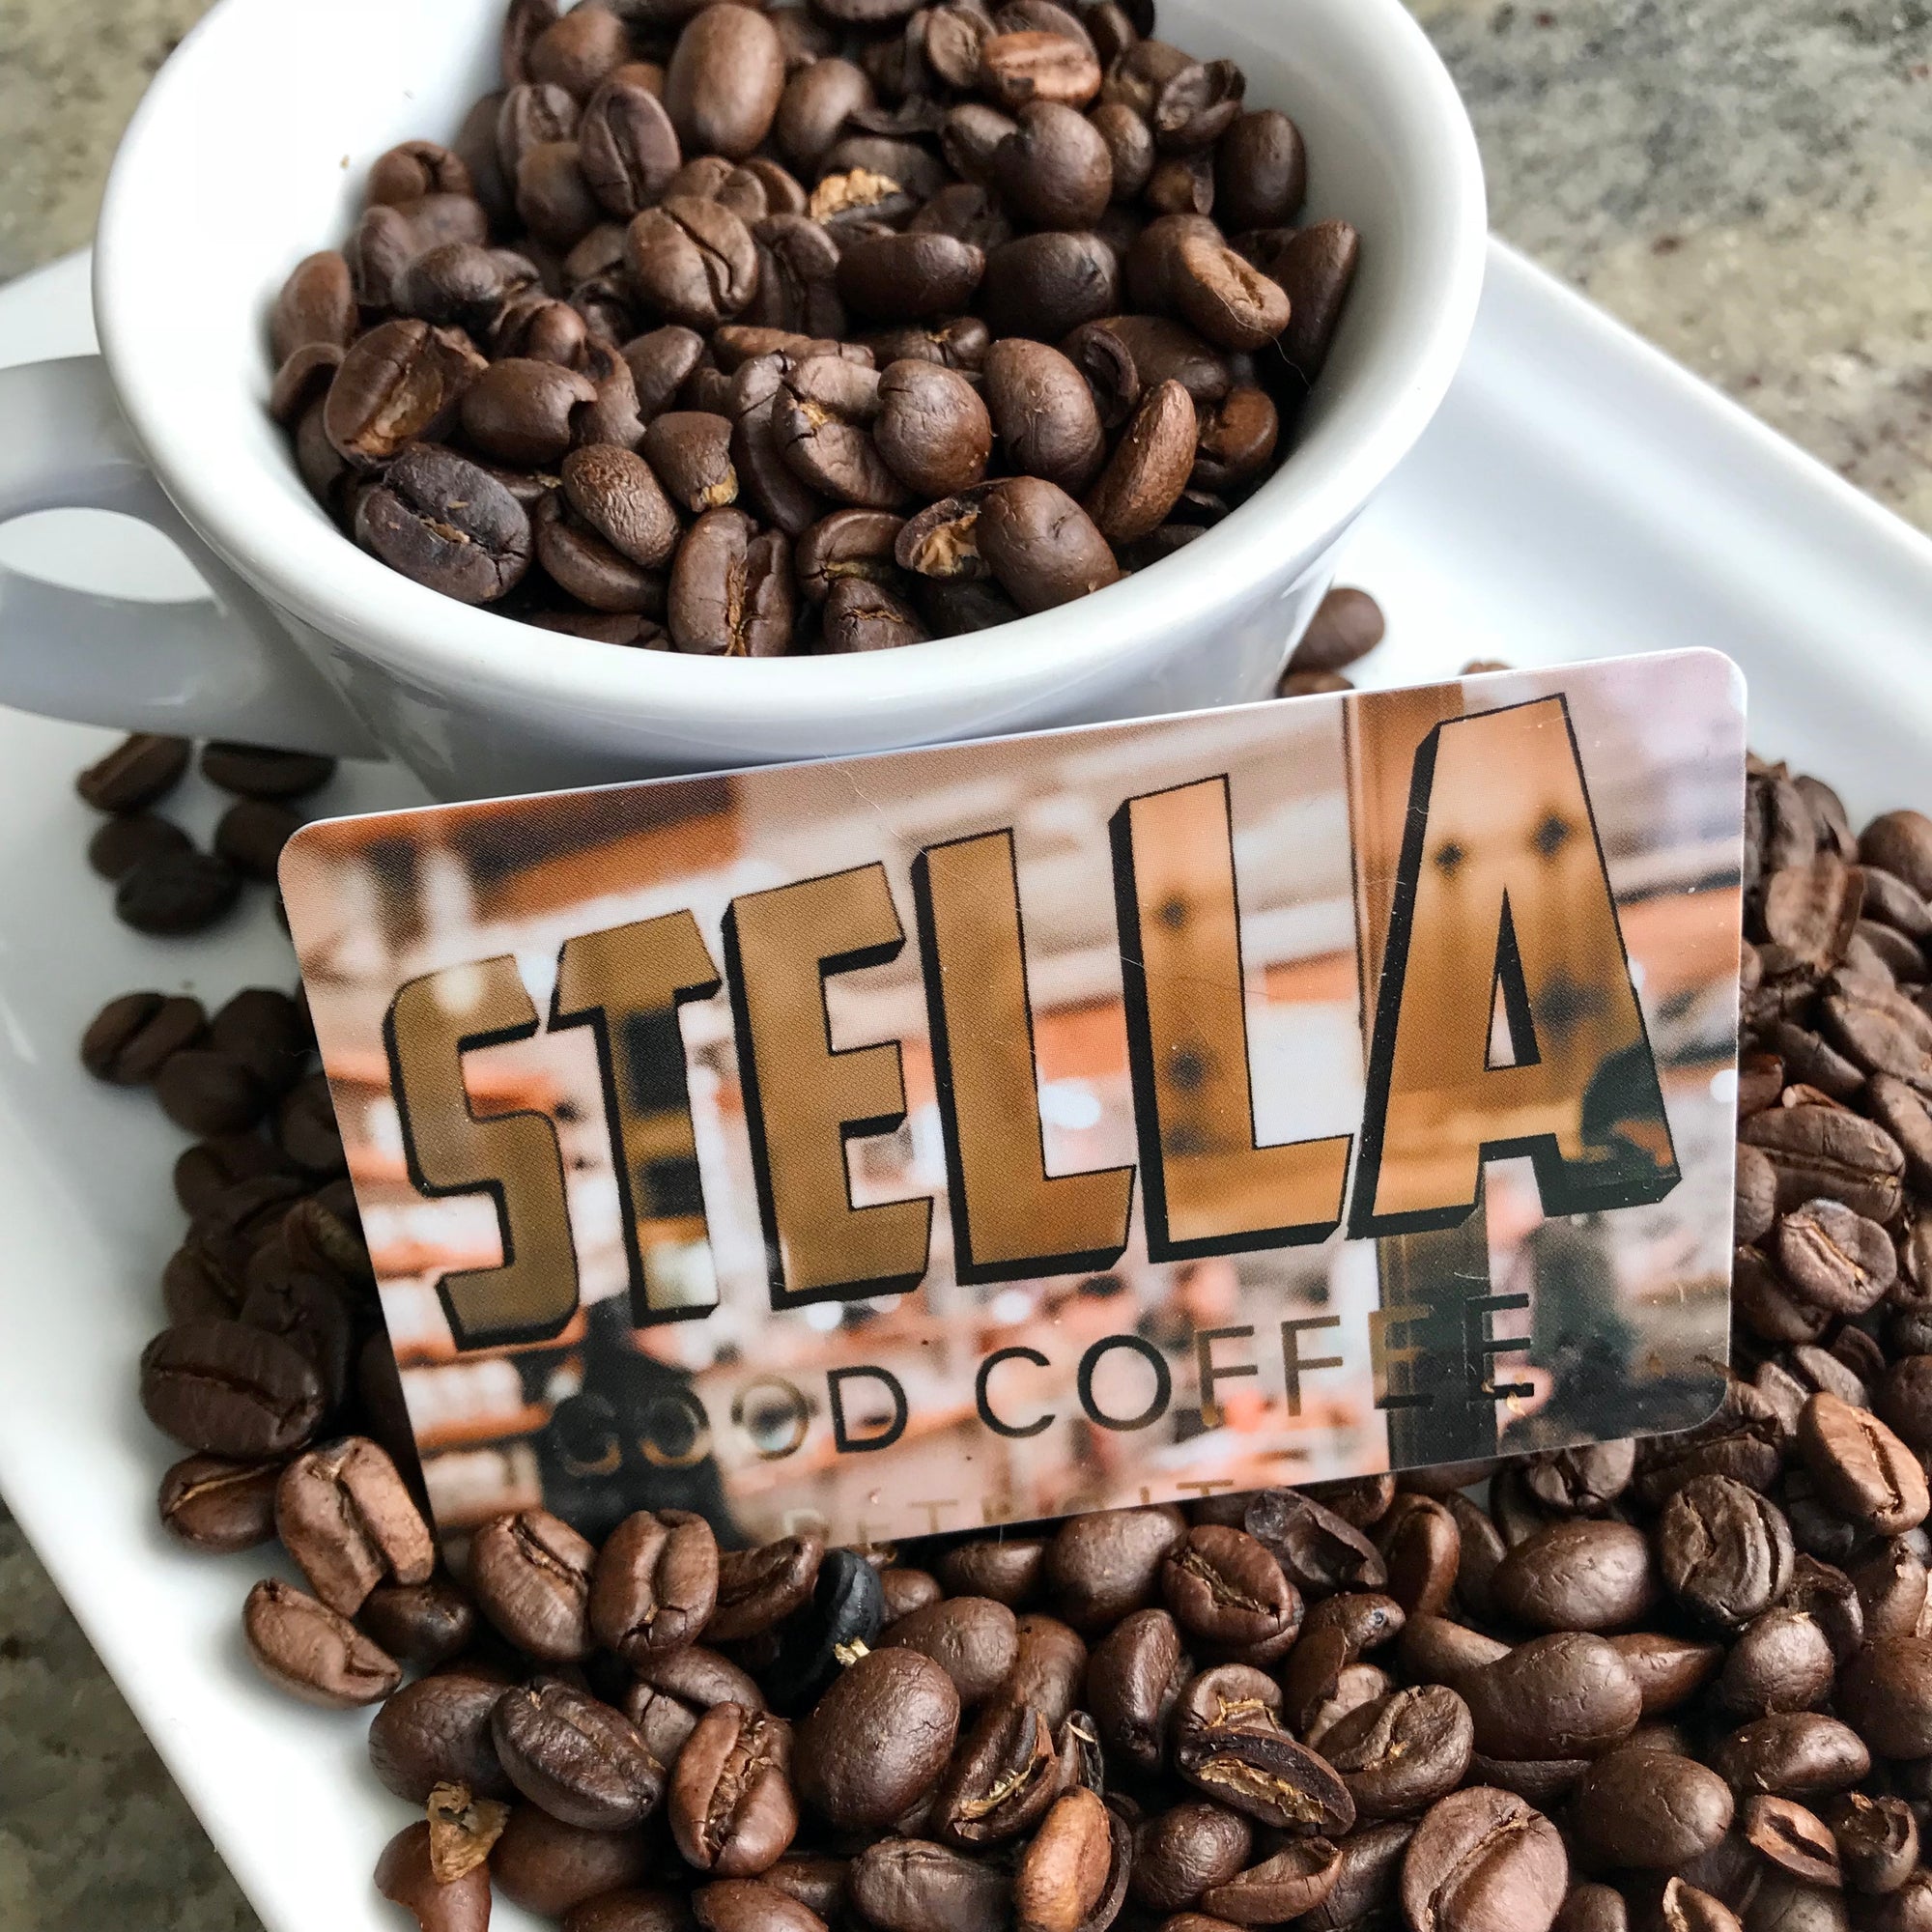 Stella Good Coffee Gift Card - $250    